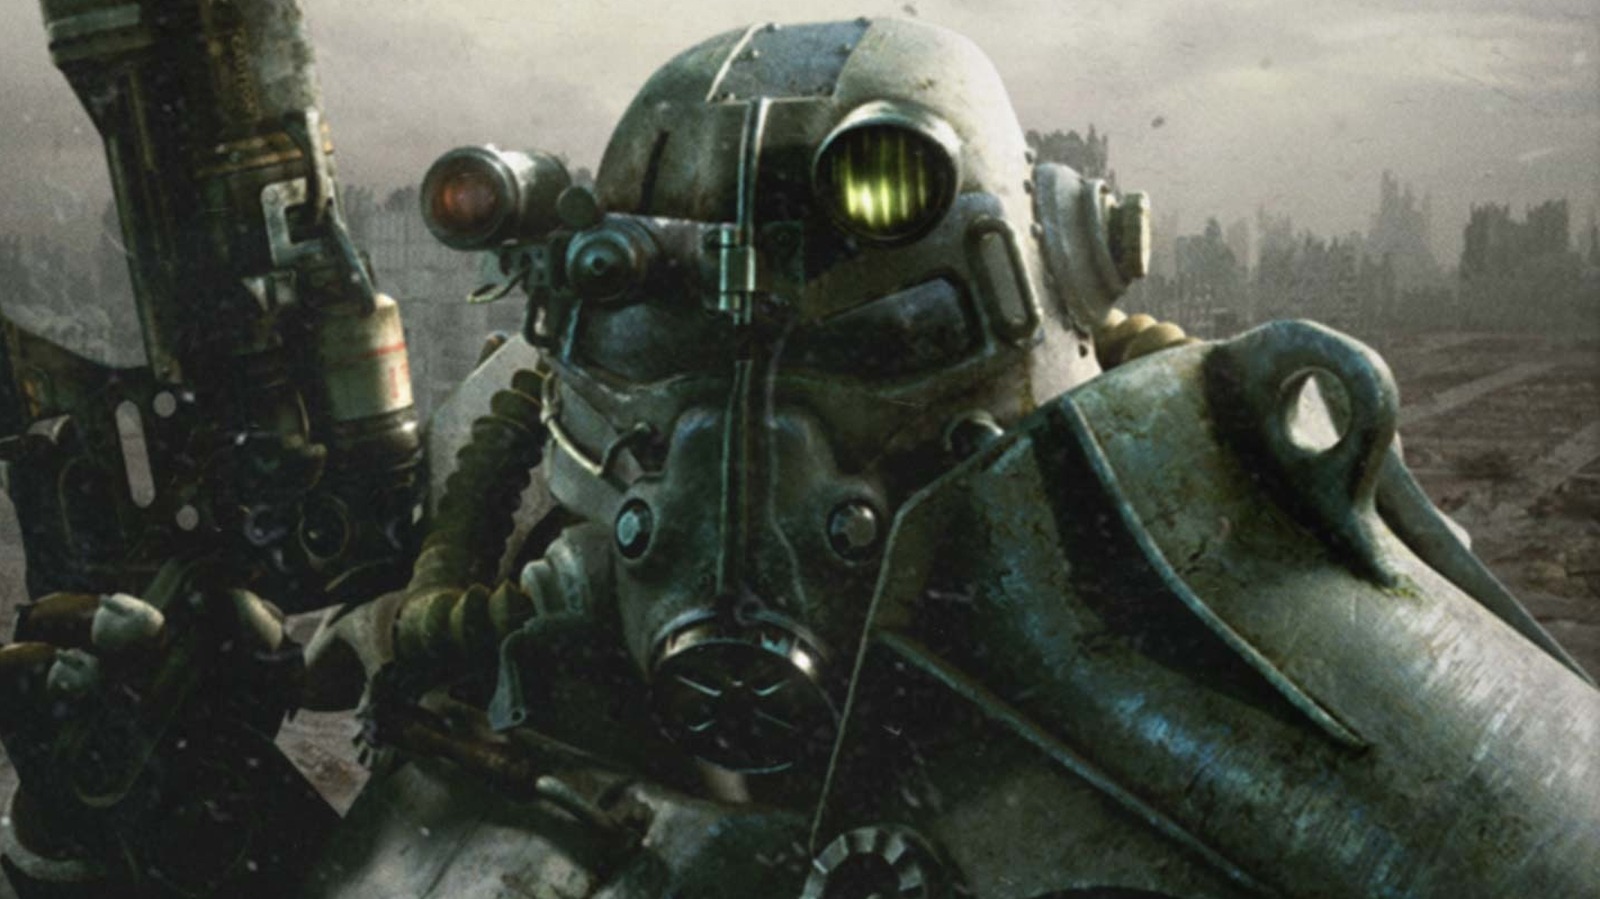 Metacritic - FALLOUT ON PC - Metascore History/Progression: Fallout [89]   Fallout 2 [86]  metacritic.com/game/pc/fallout-2 Fallout 3 [91]  .com/game/pc/fallout-3 Fallout: New